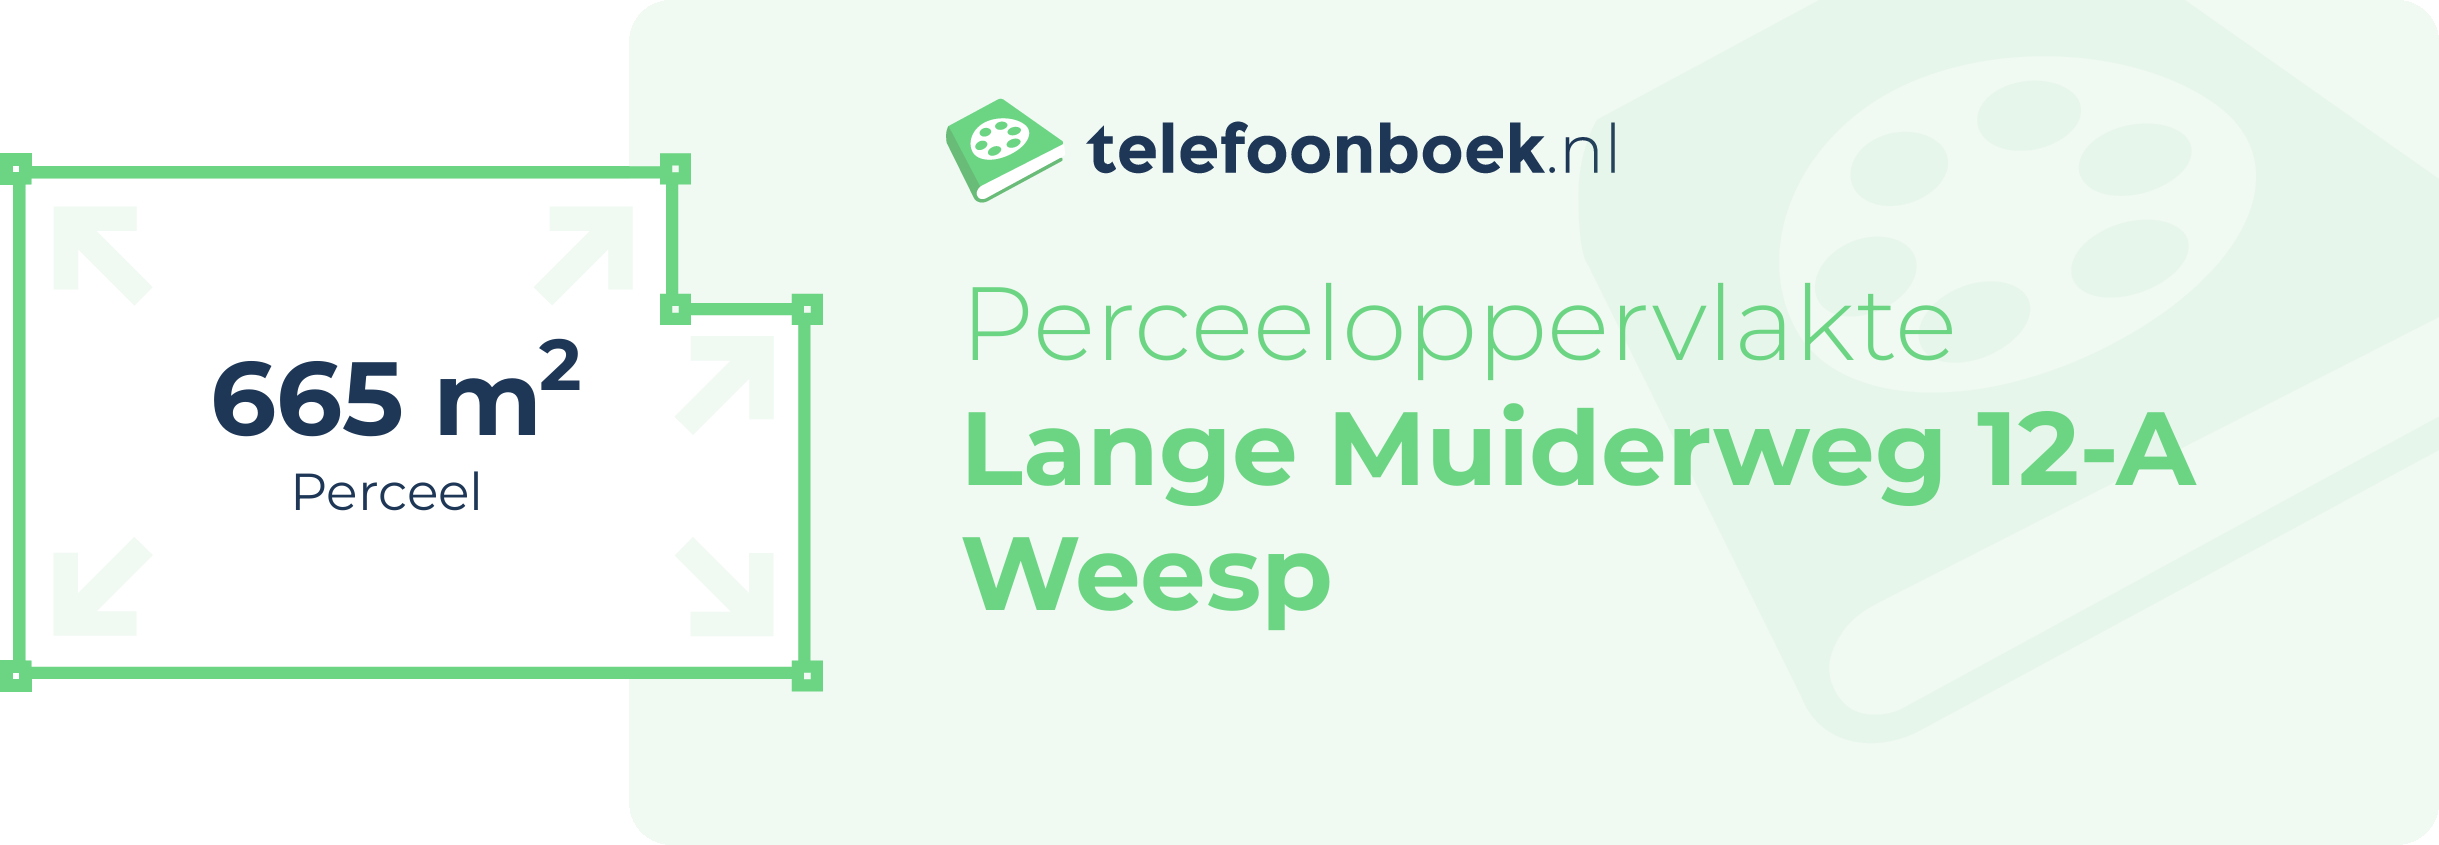 Perceeloppervlakte Lange Muiderweg 12-A Weesp